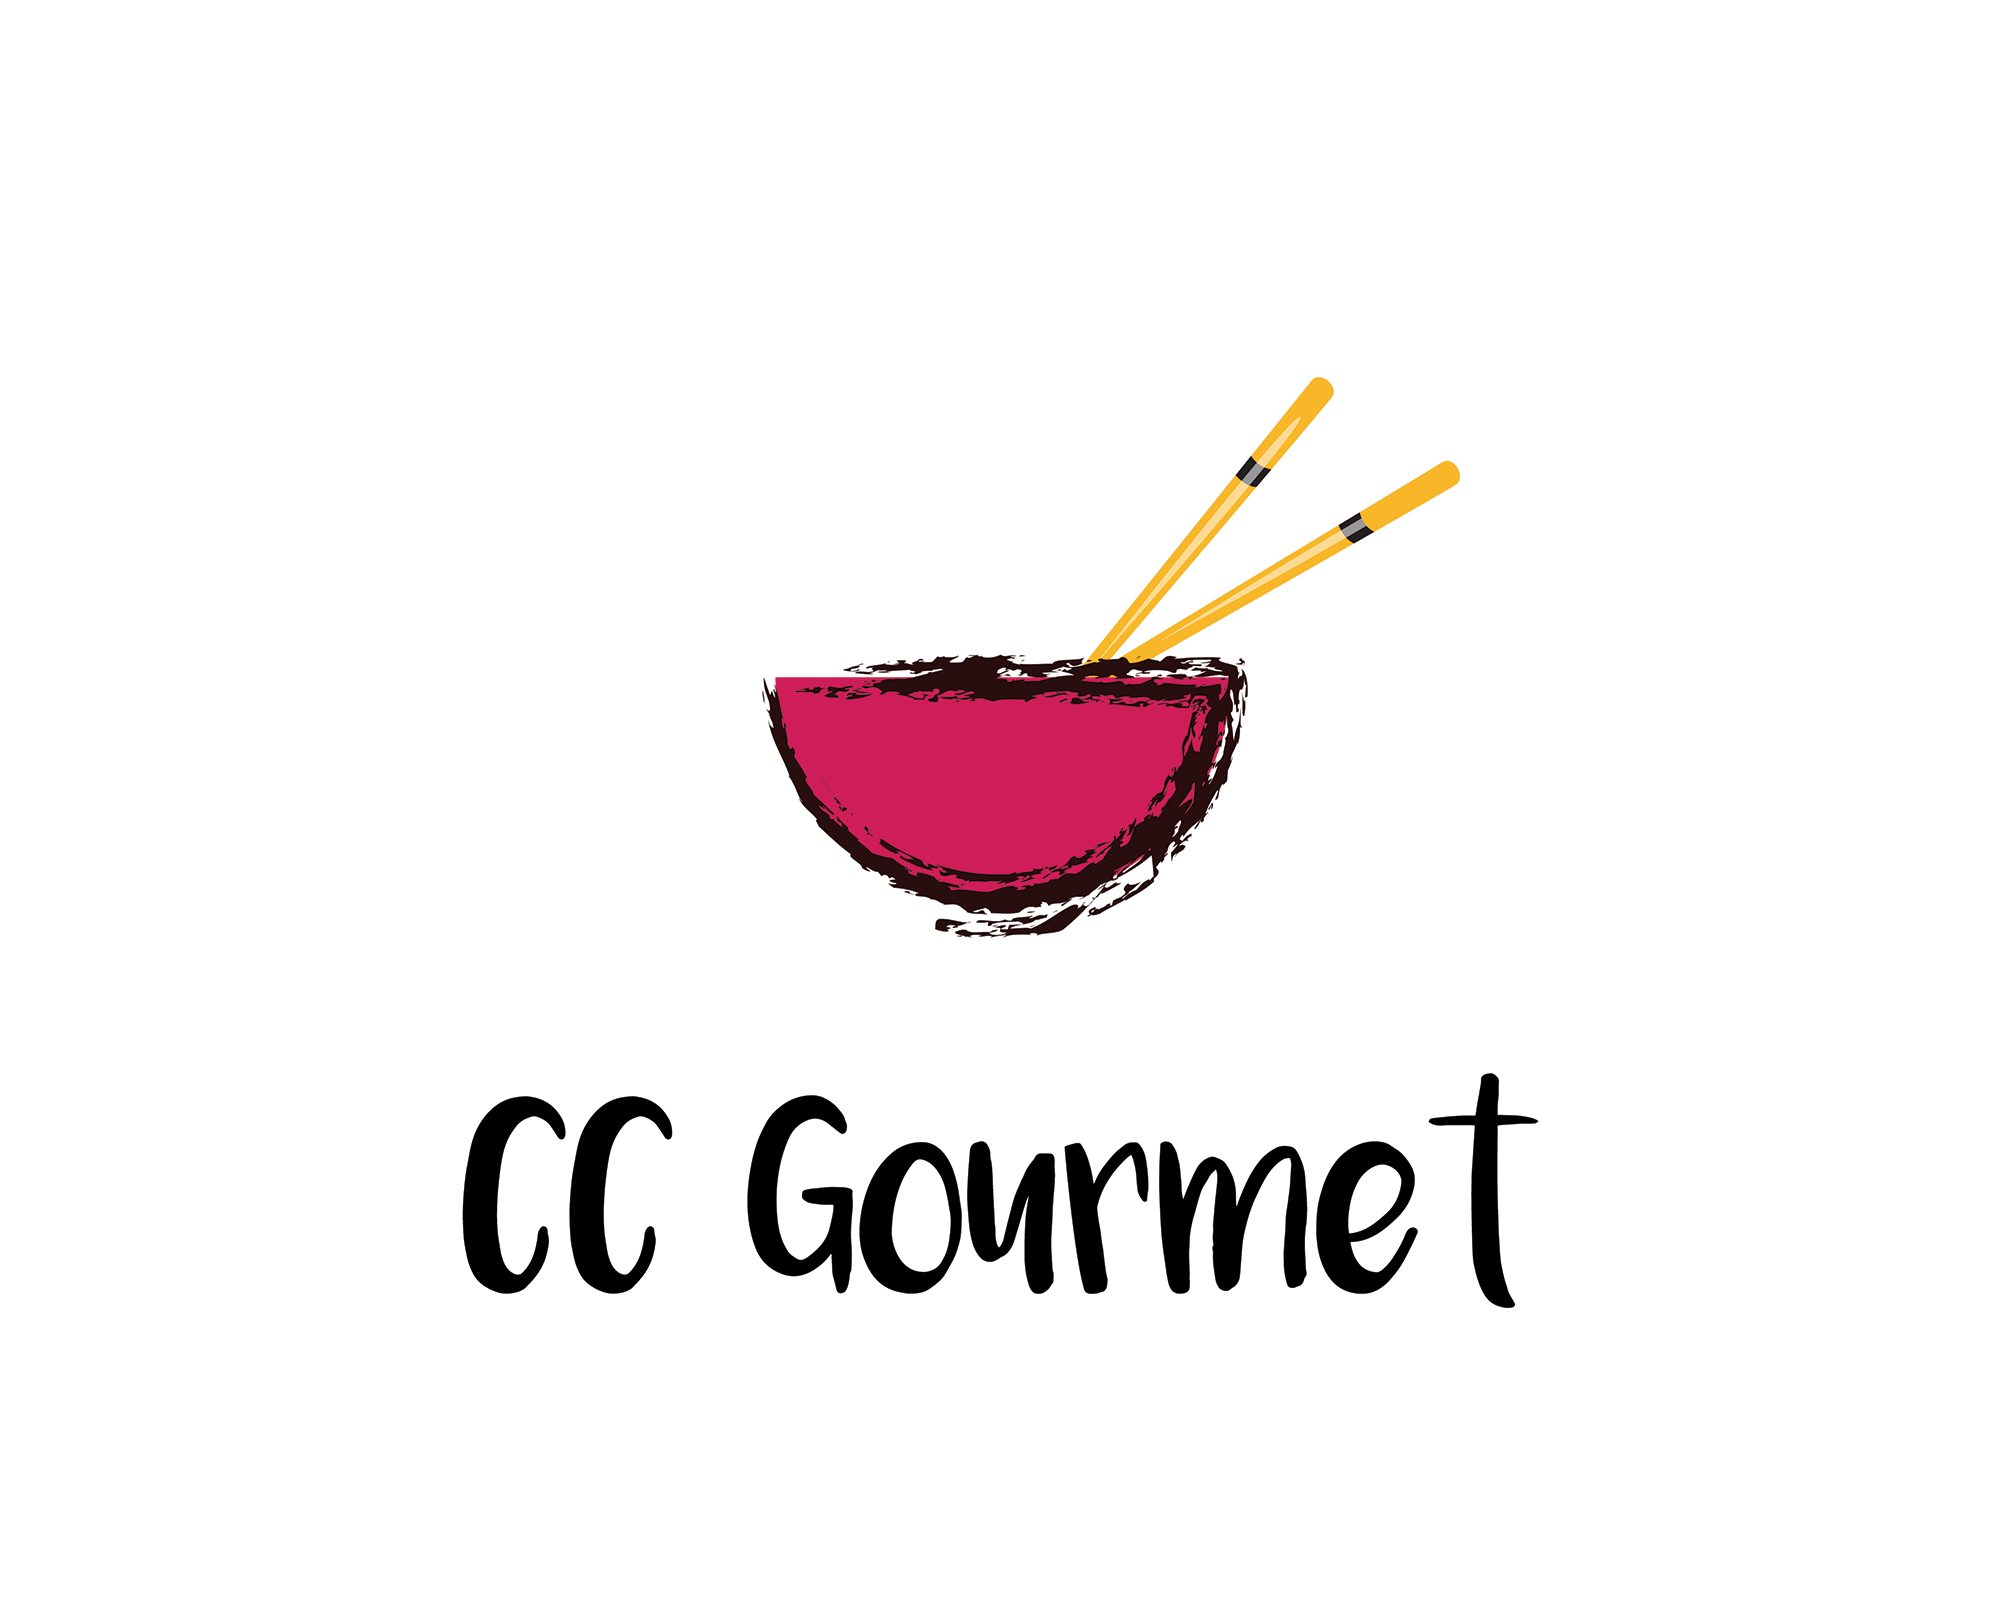 CC Gourmet